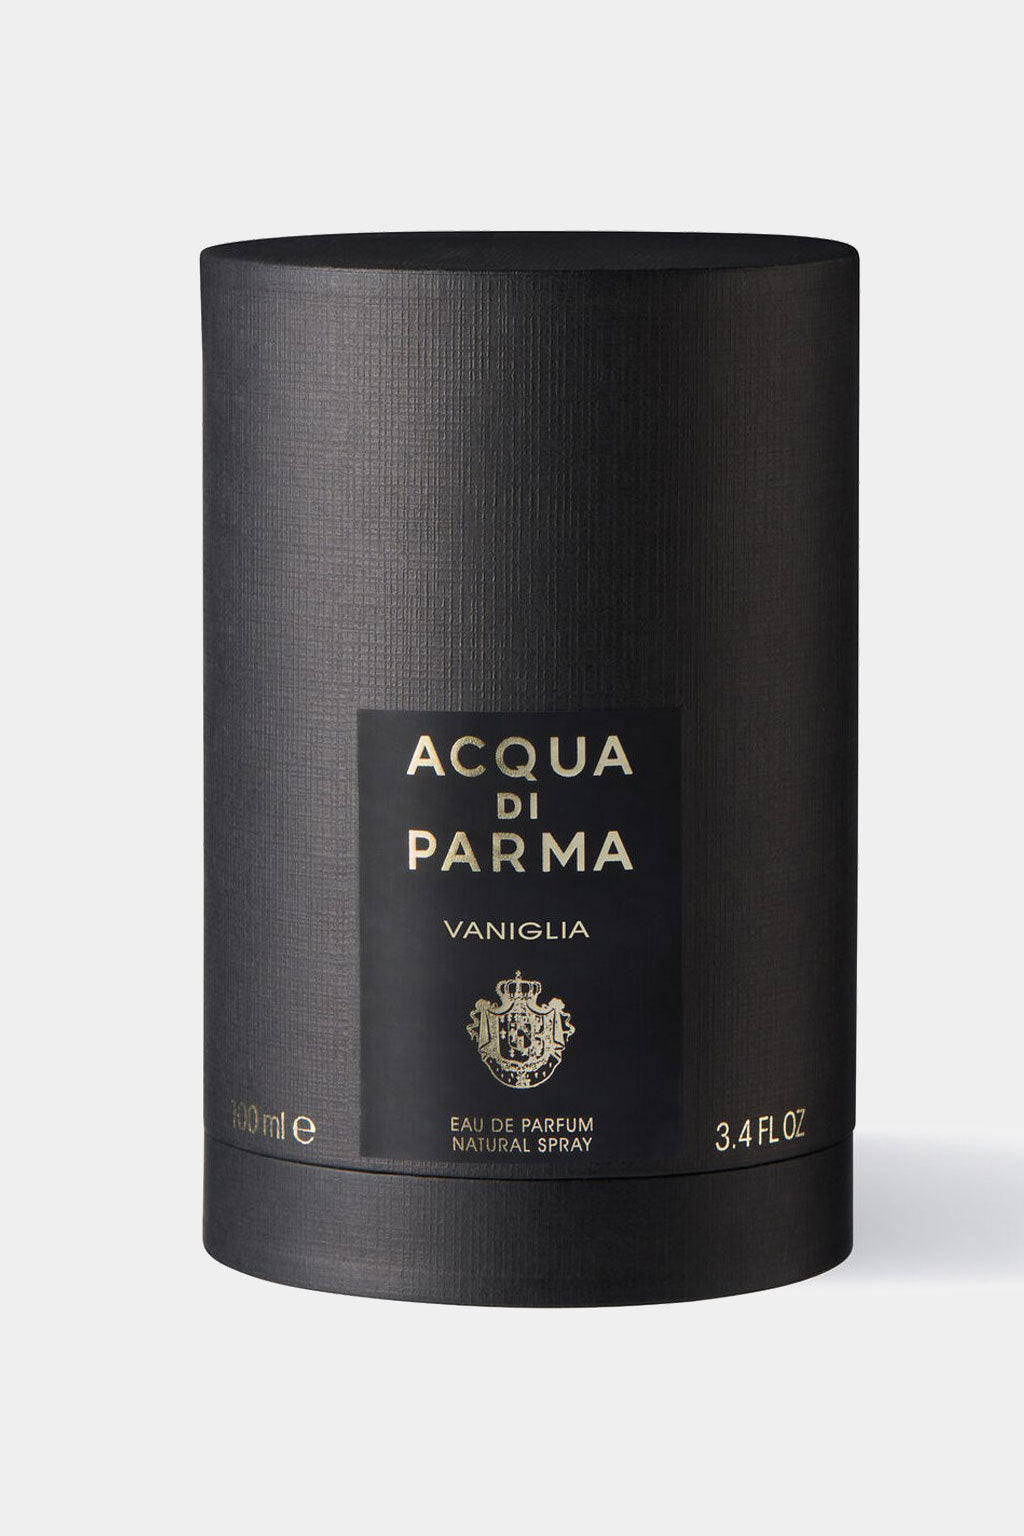 Acqua Di Parma - Vaniglia Eau de Parfum